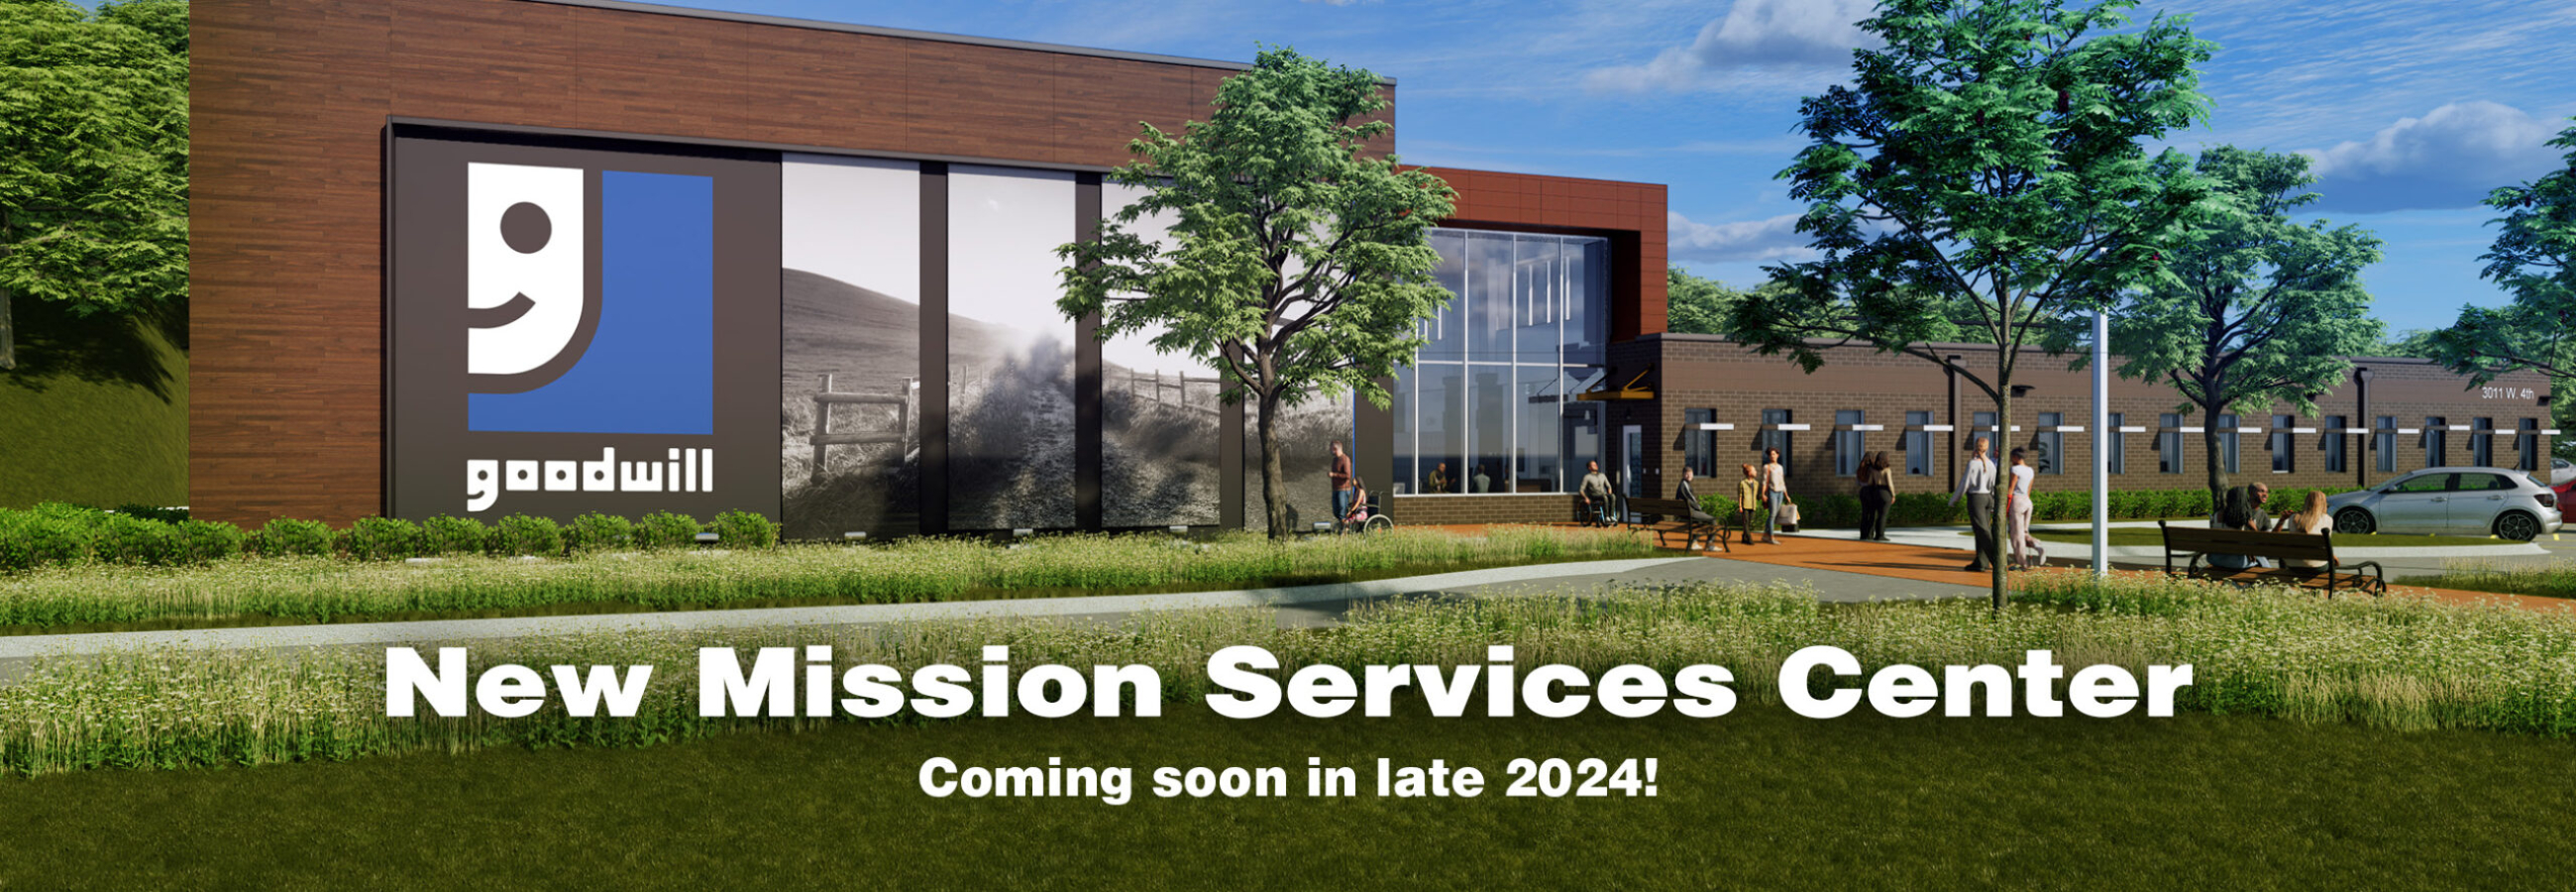 Mission Services Center